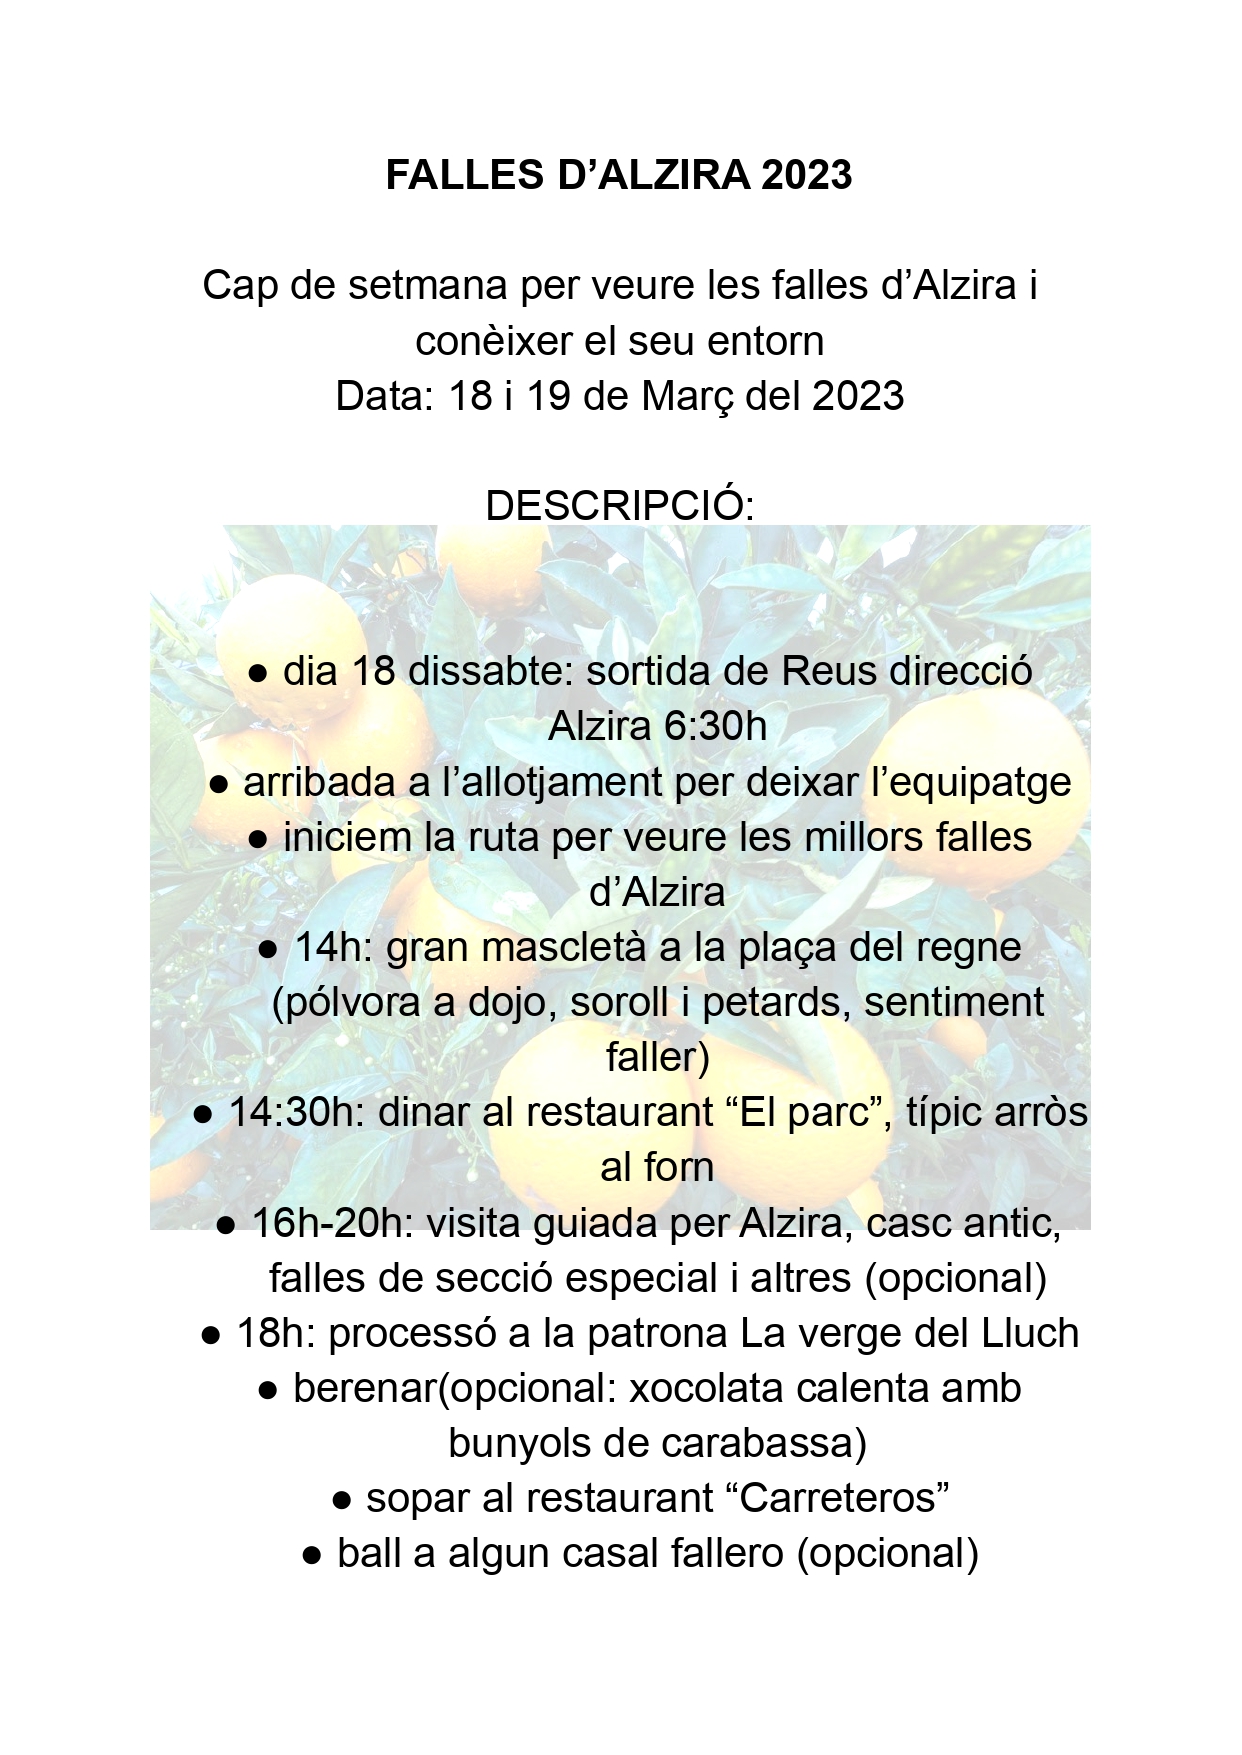 FALLES D’ALZIRA 2023 (1)_page-0001.jpg (788 KB)